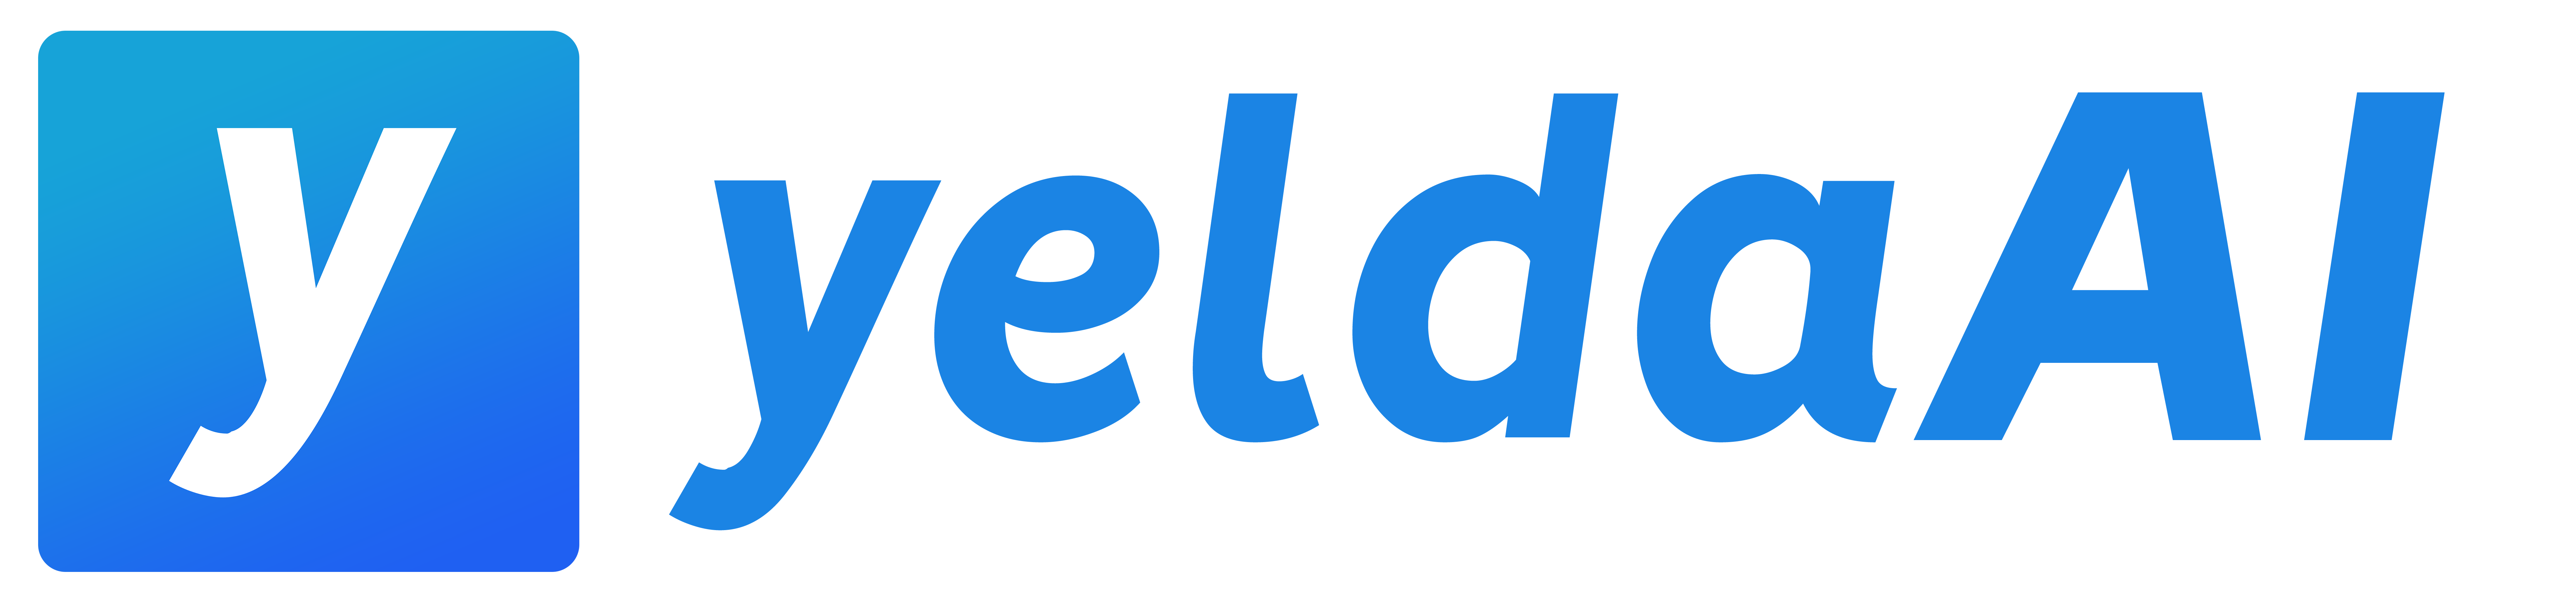 logo YeldaAI